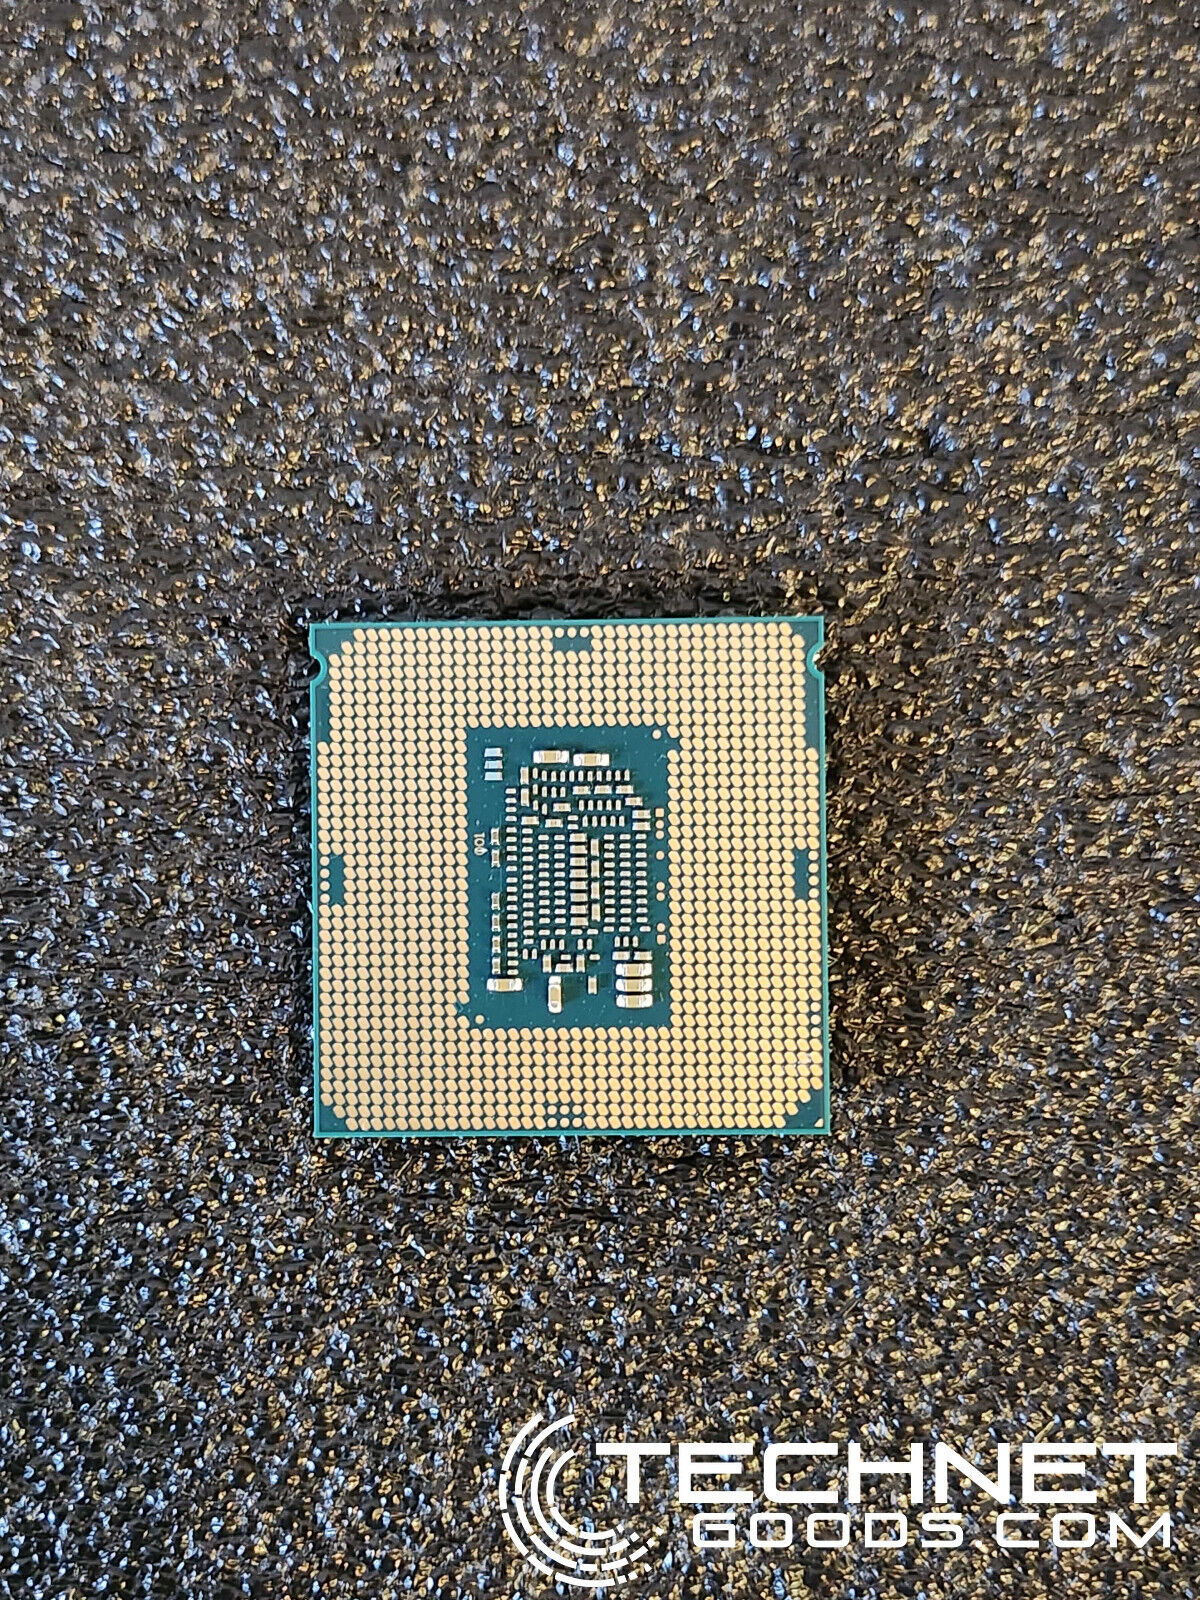 Intel Pentium G4400 3.30 GHz LGA 1151 Processor (SR2DC) - TESTED